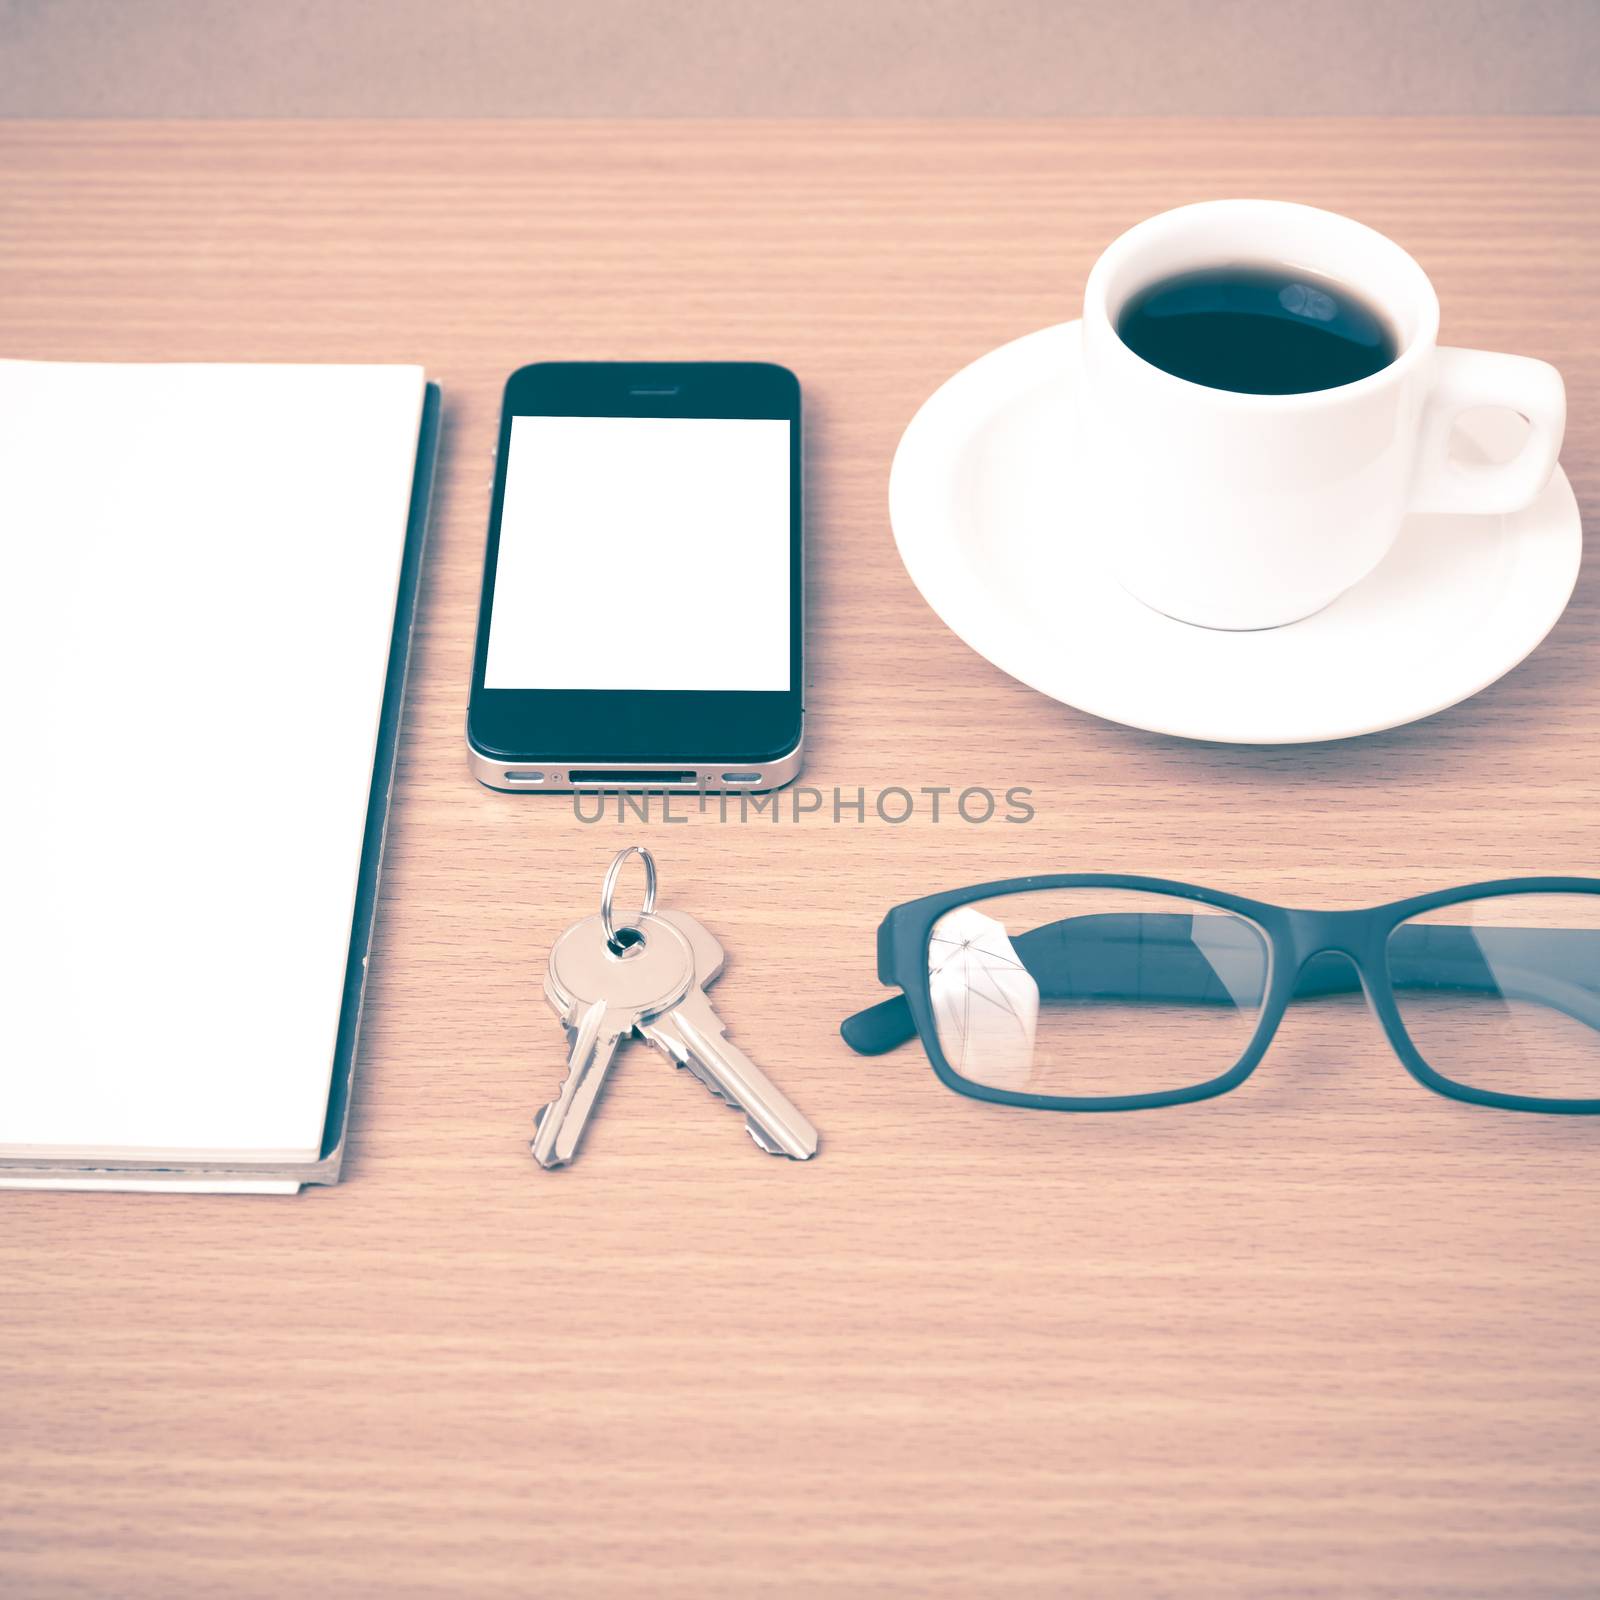 coffee,phone,notepad,eyeglasses and key on wood table background vintage style